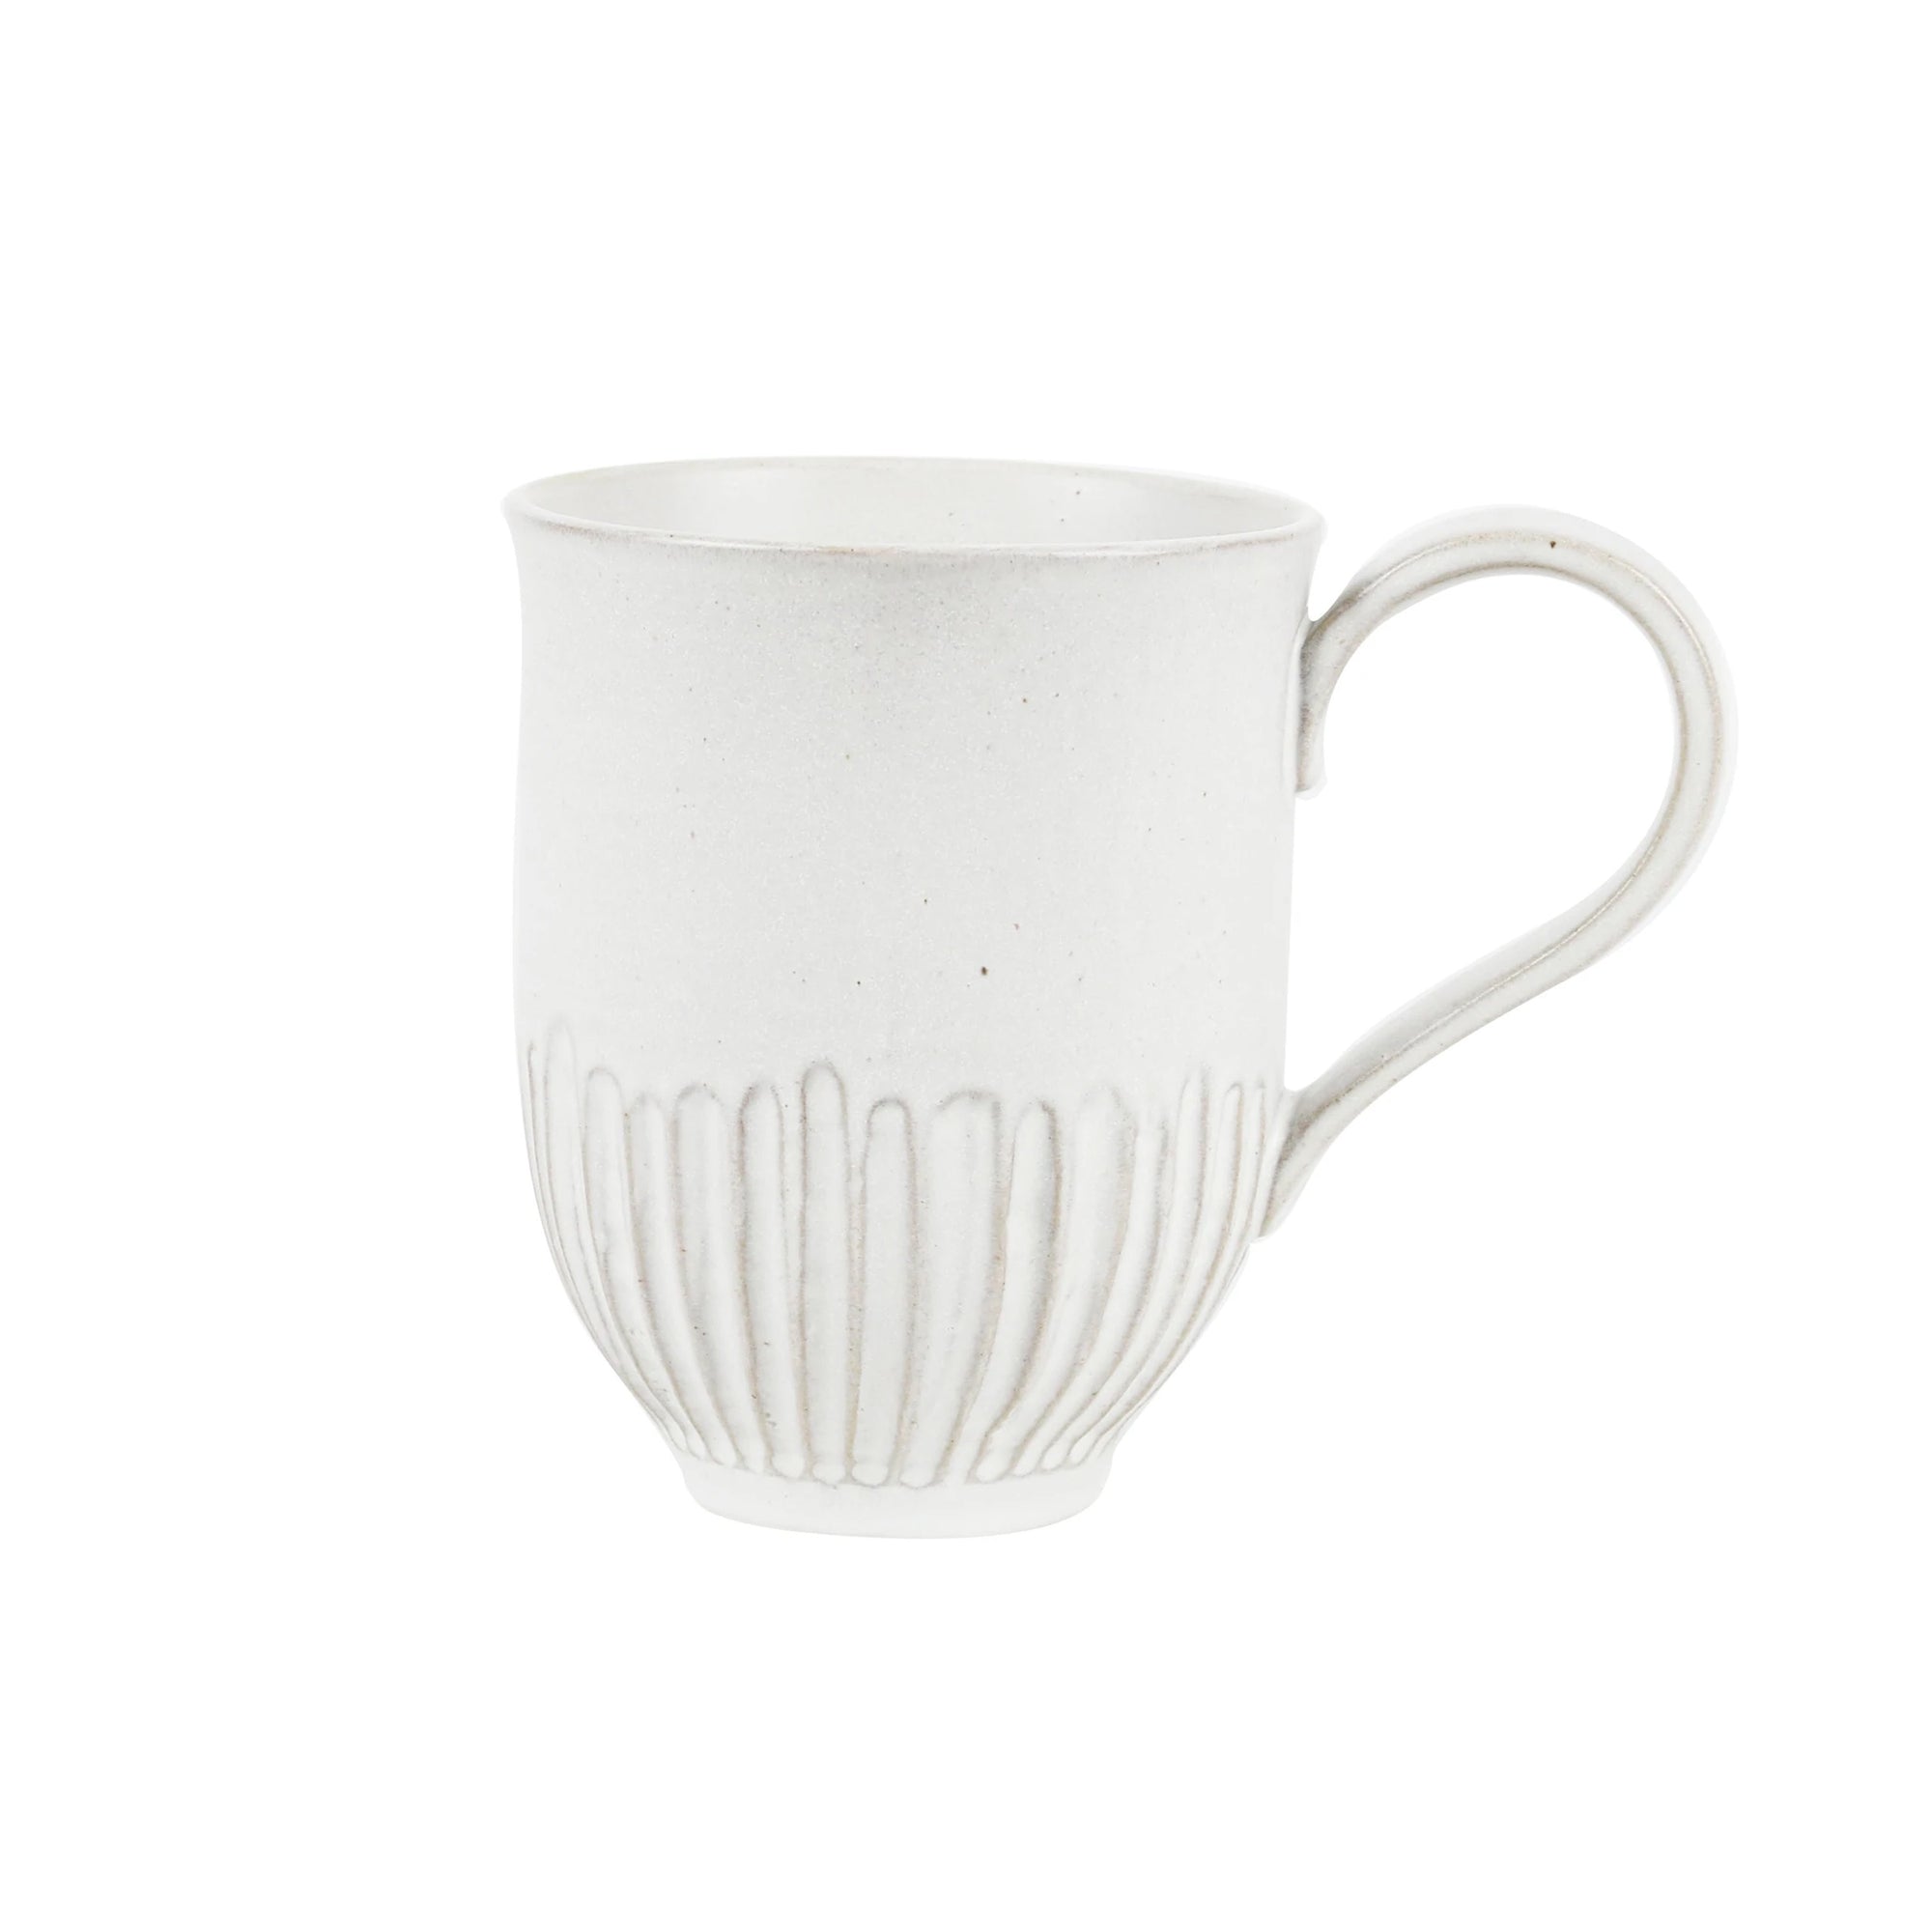 Robert Gordon Crafted Mug - White